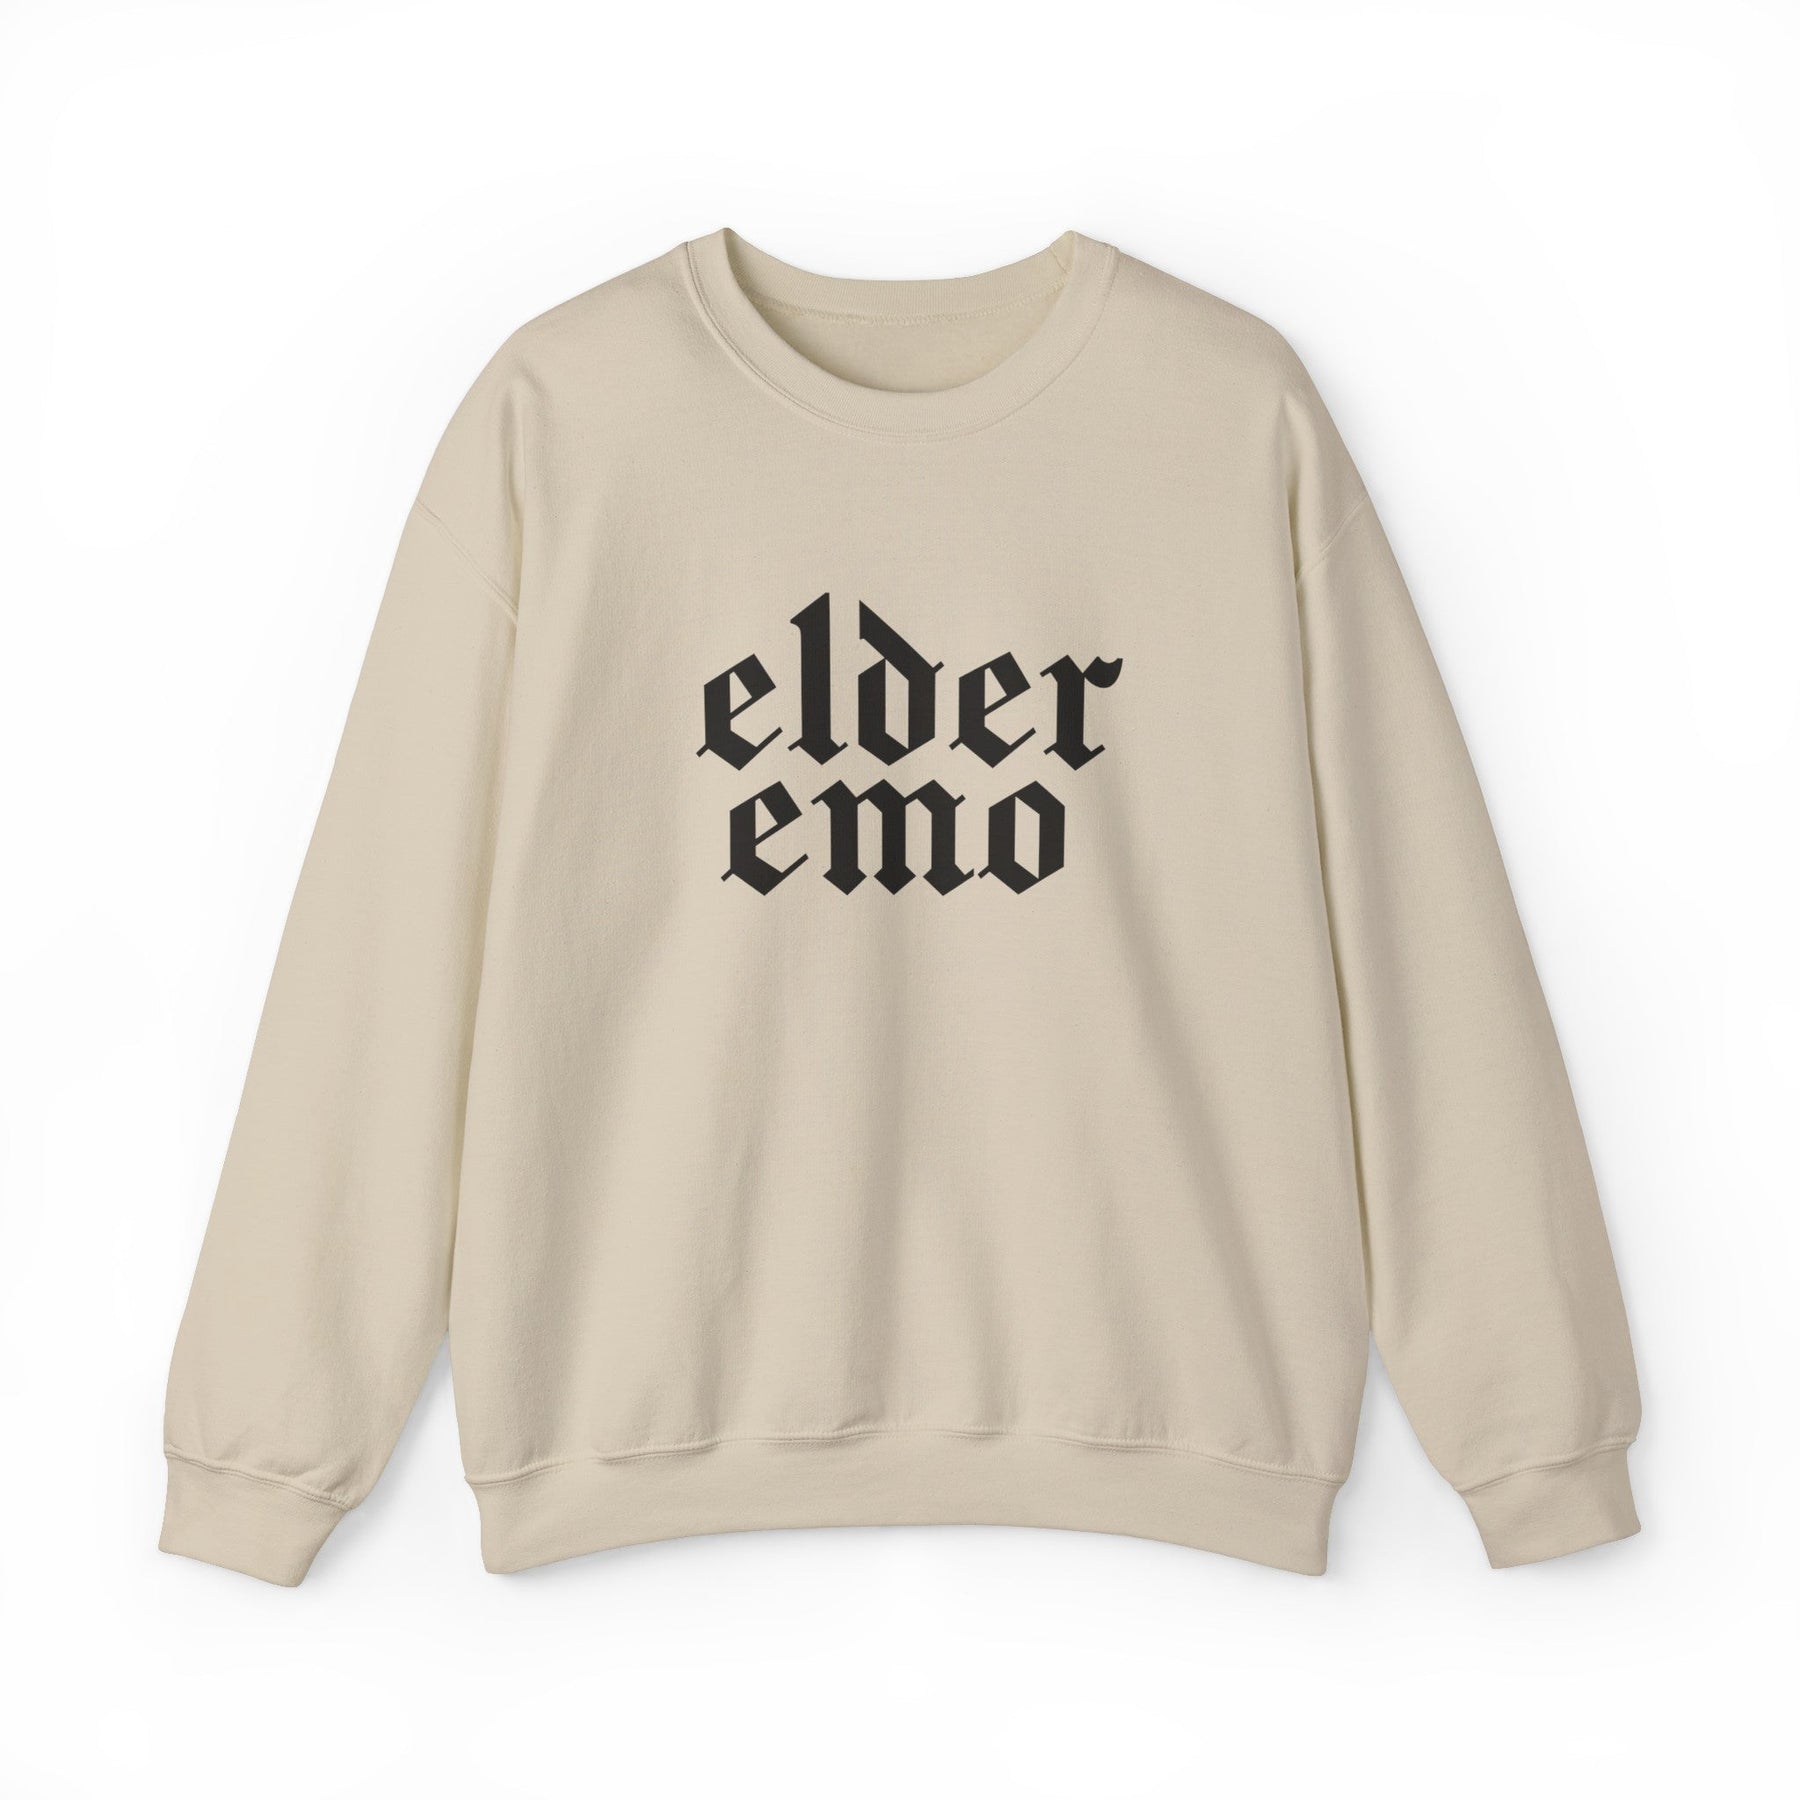 Elder Emo Gothic Font Crewneck Sweatshirt - Goth Cloth Co.Sweatshirt30660895362383812896